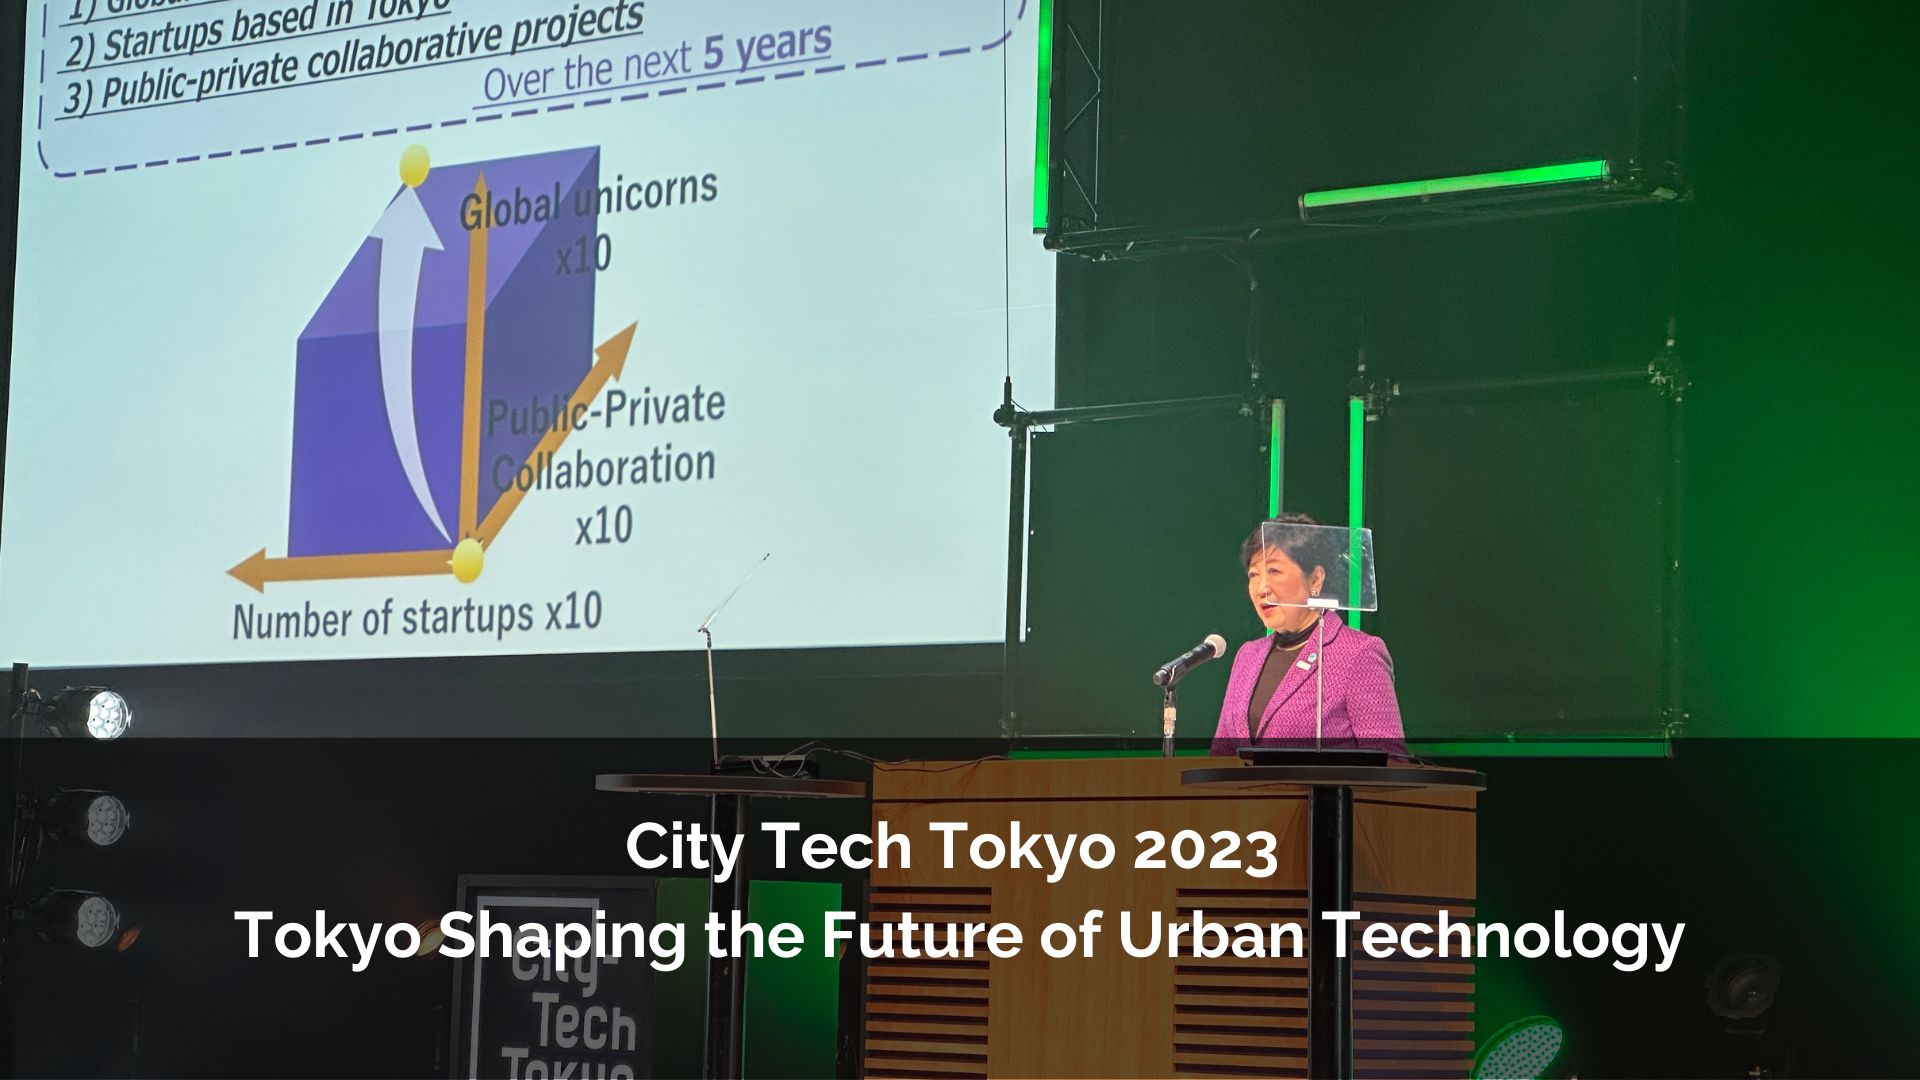 City-Tech.Tokyo 2023: Tokyo Shaping The Future Of Urban Technology